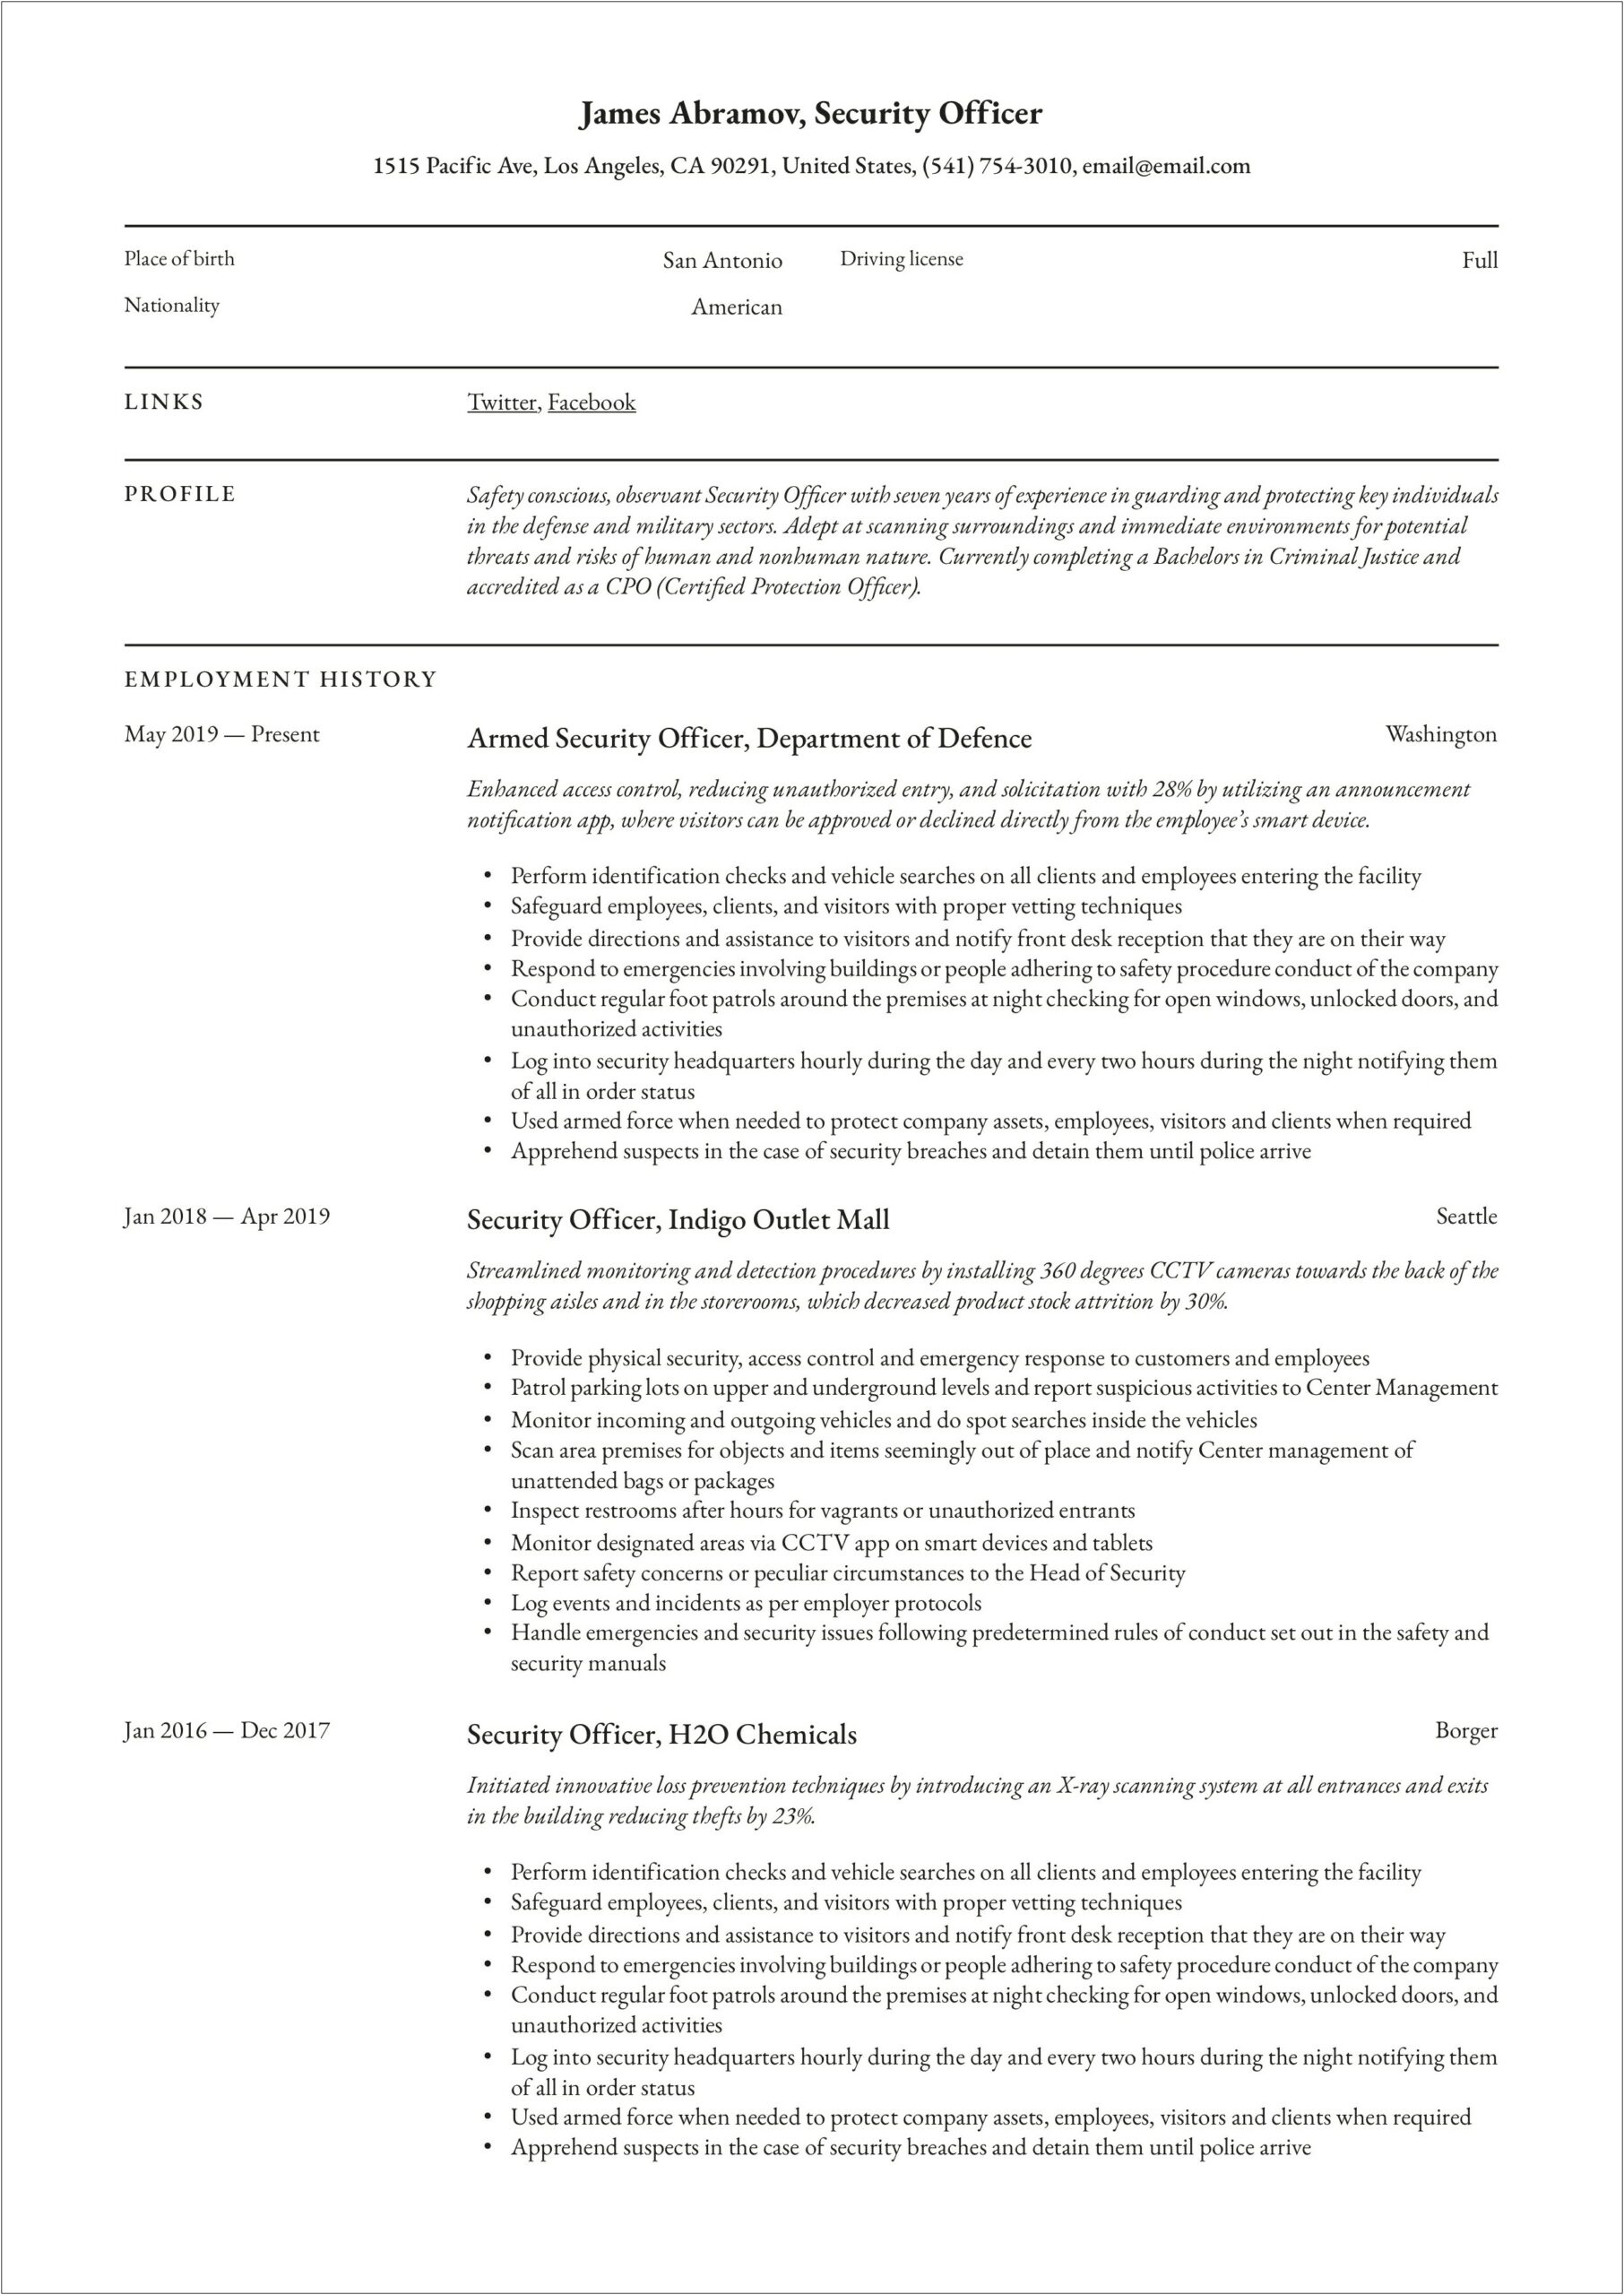 Resume Description For A Security Guard